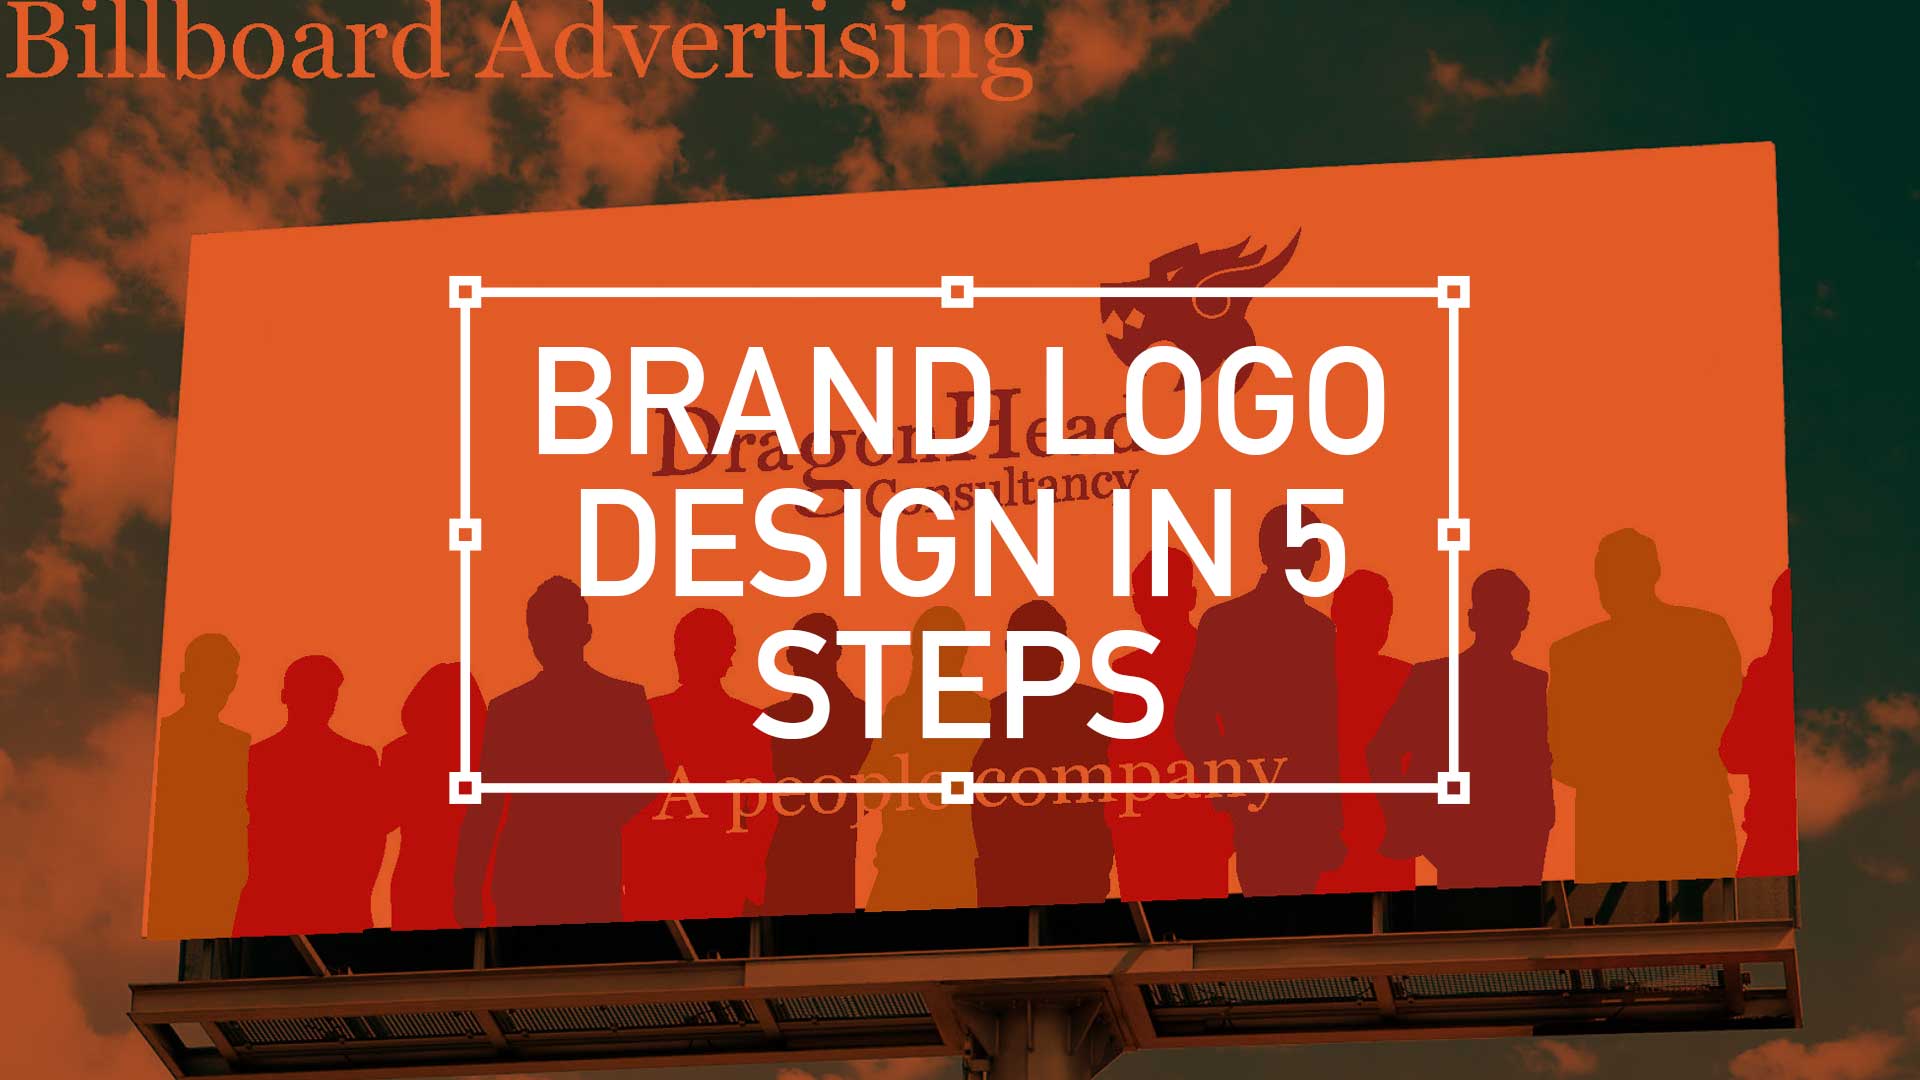 Brand logo design in 5 steps